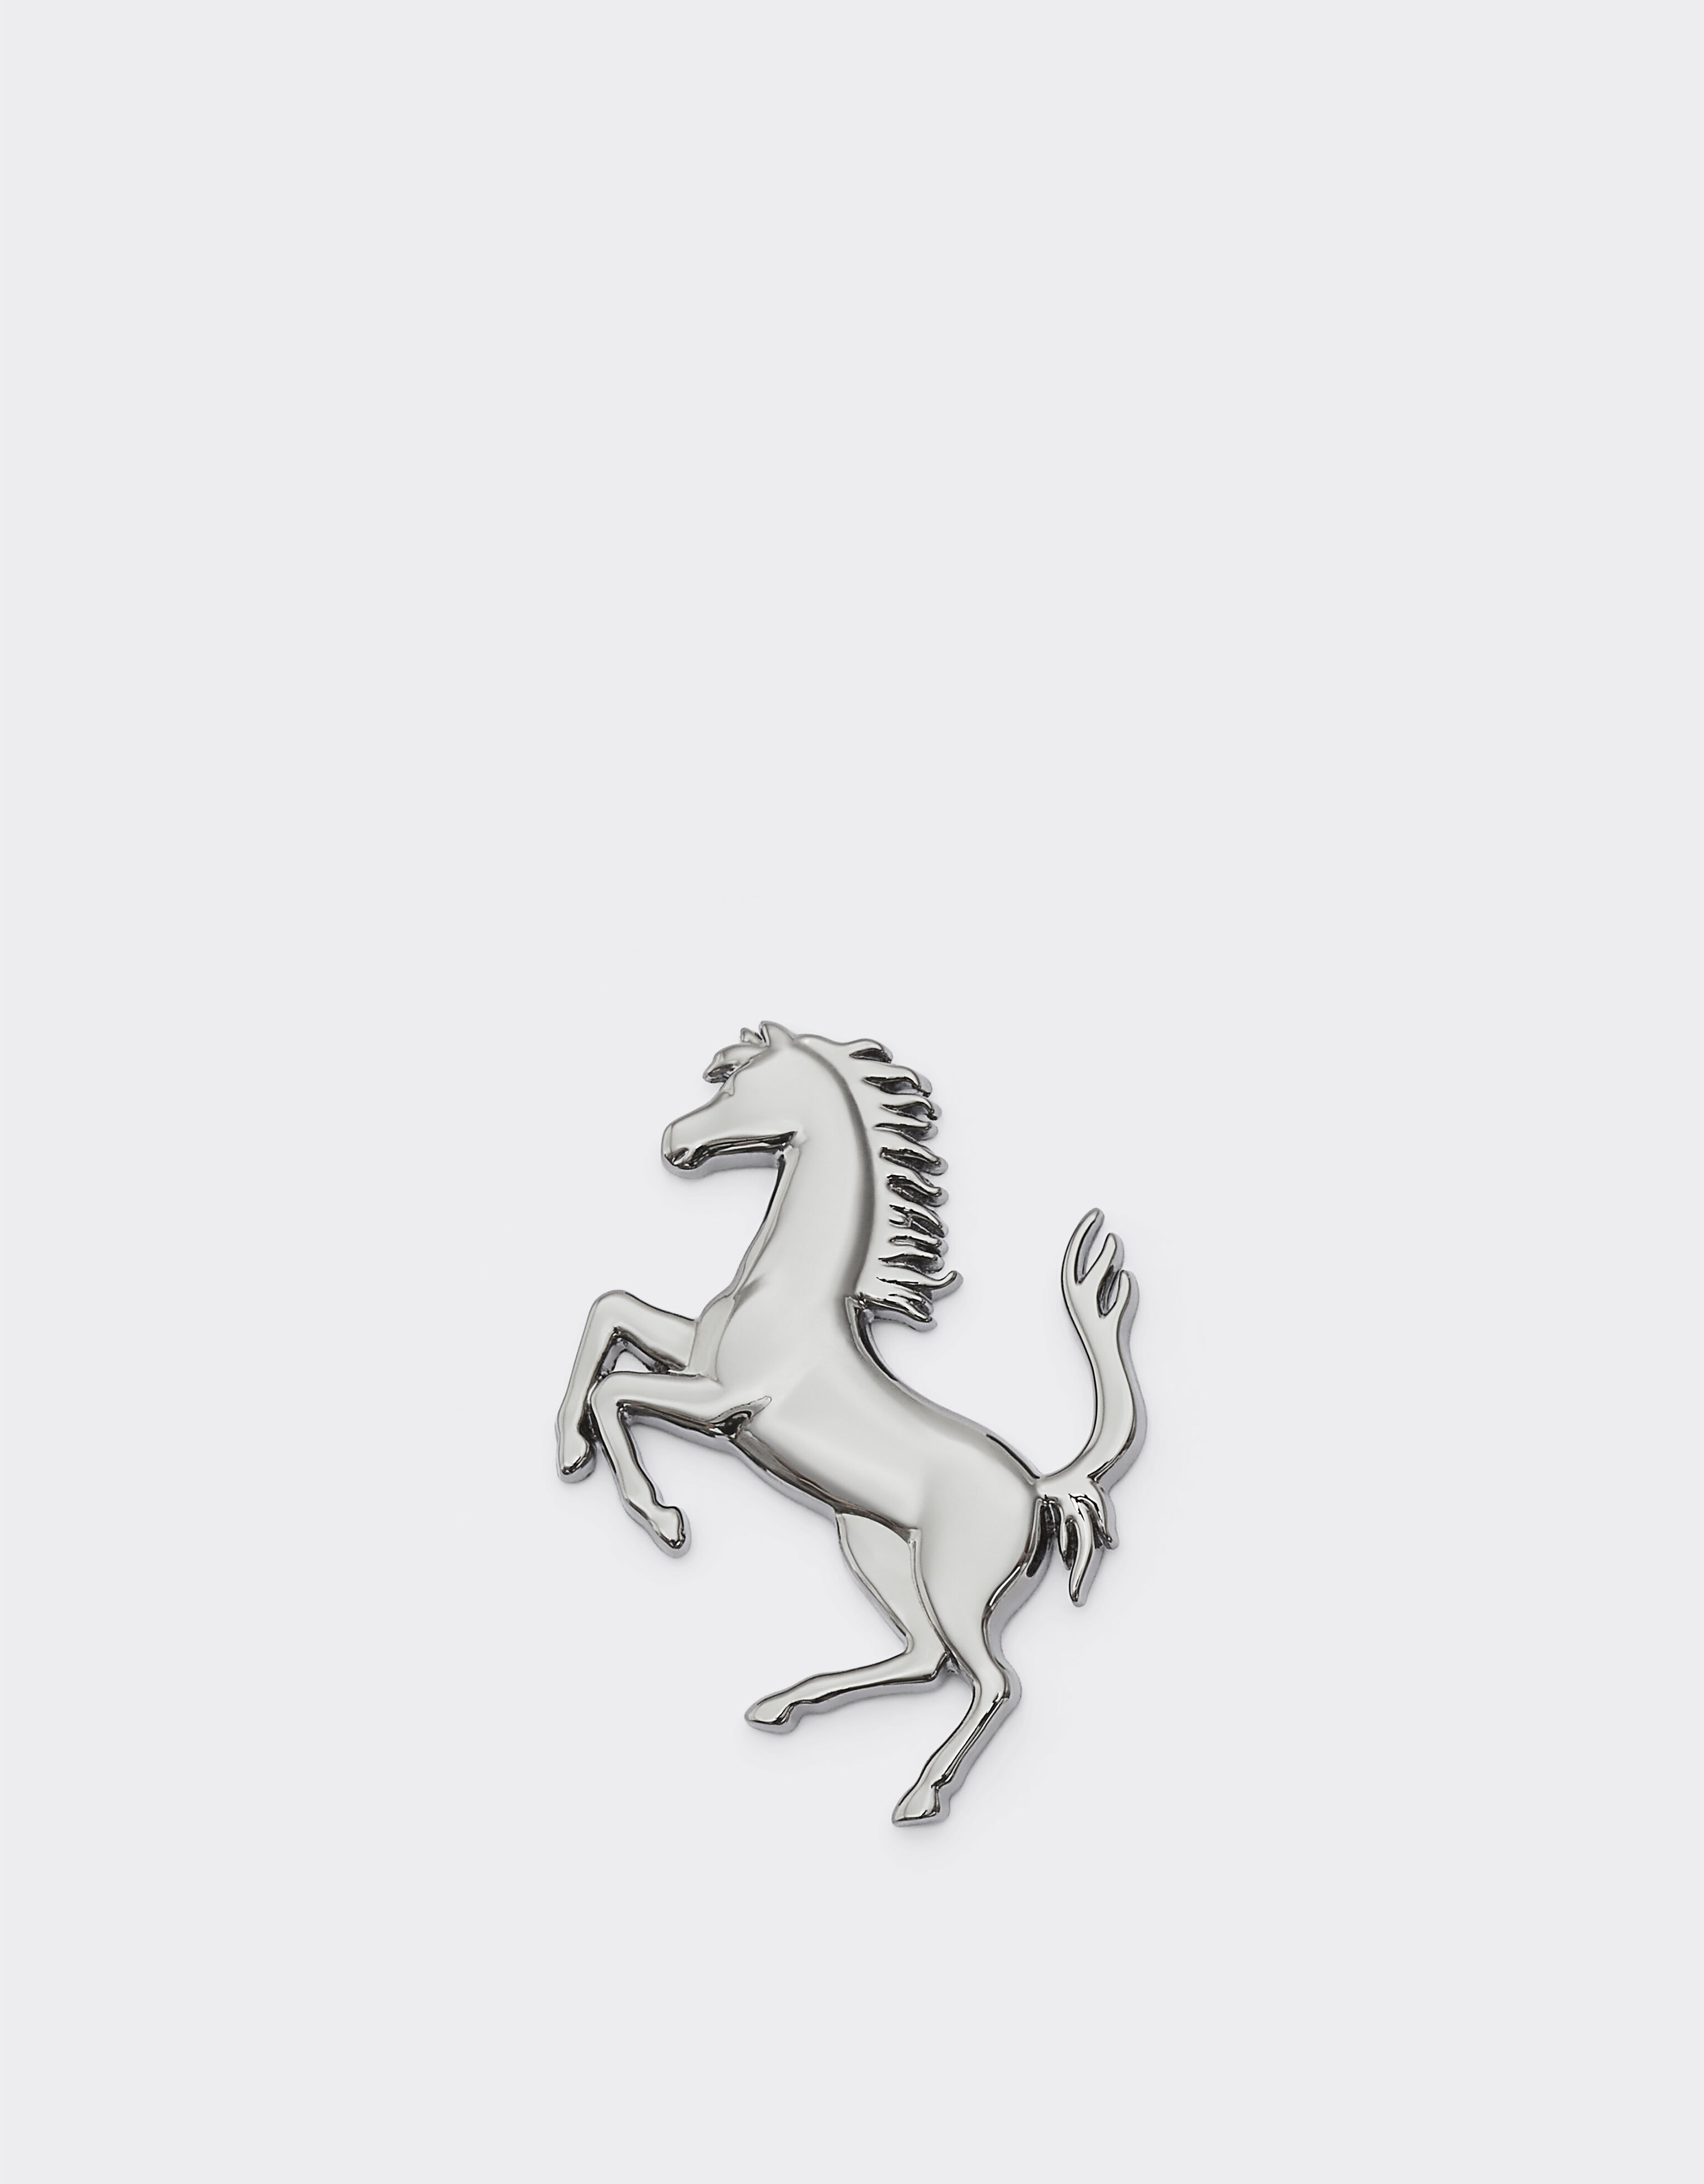 Ferrari Prancing Horse brooch Charcoal 20010f